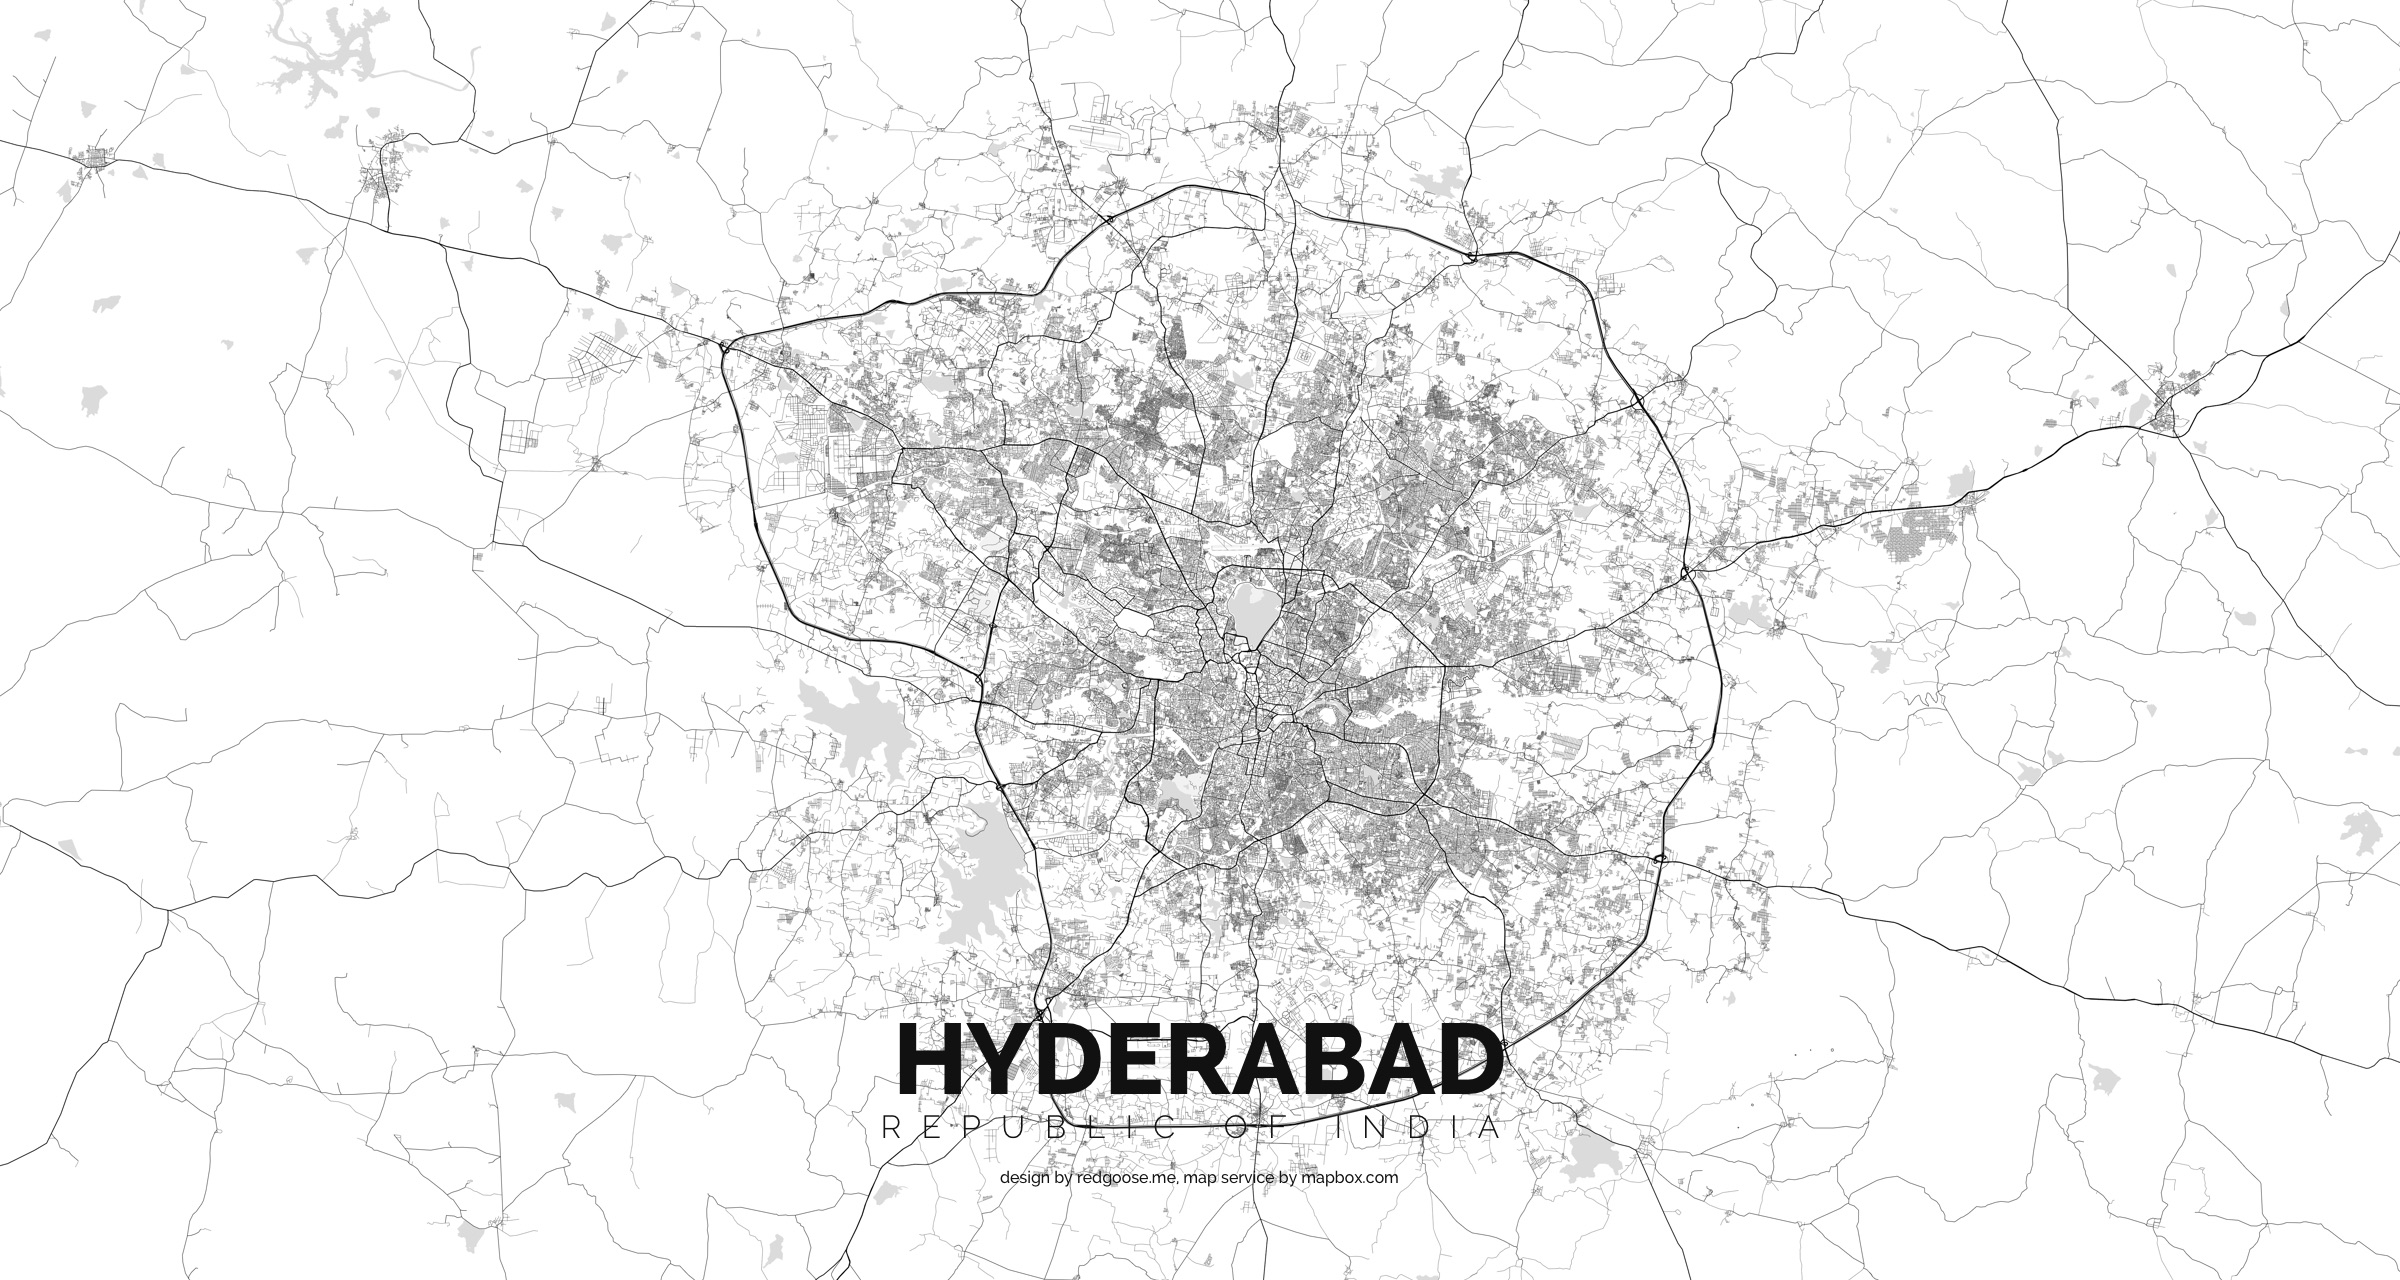 Republic_of_India_-_Hyderabad.jpg